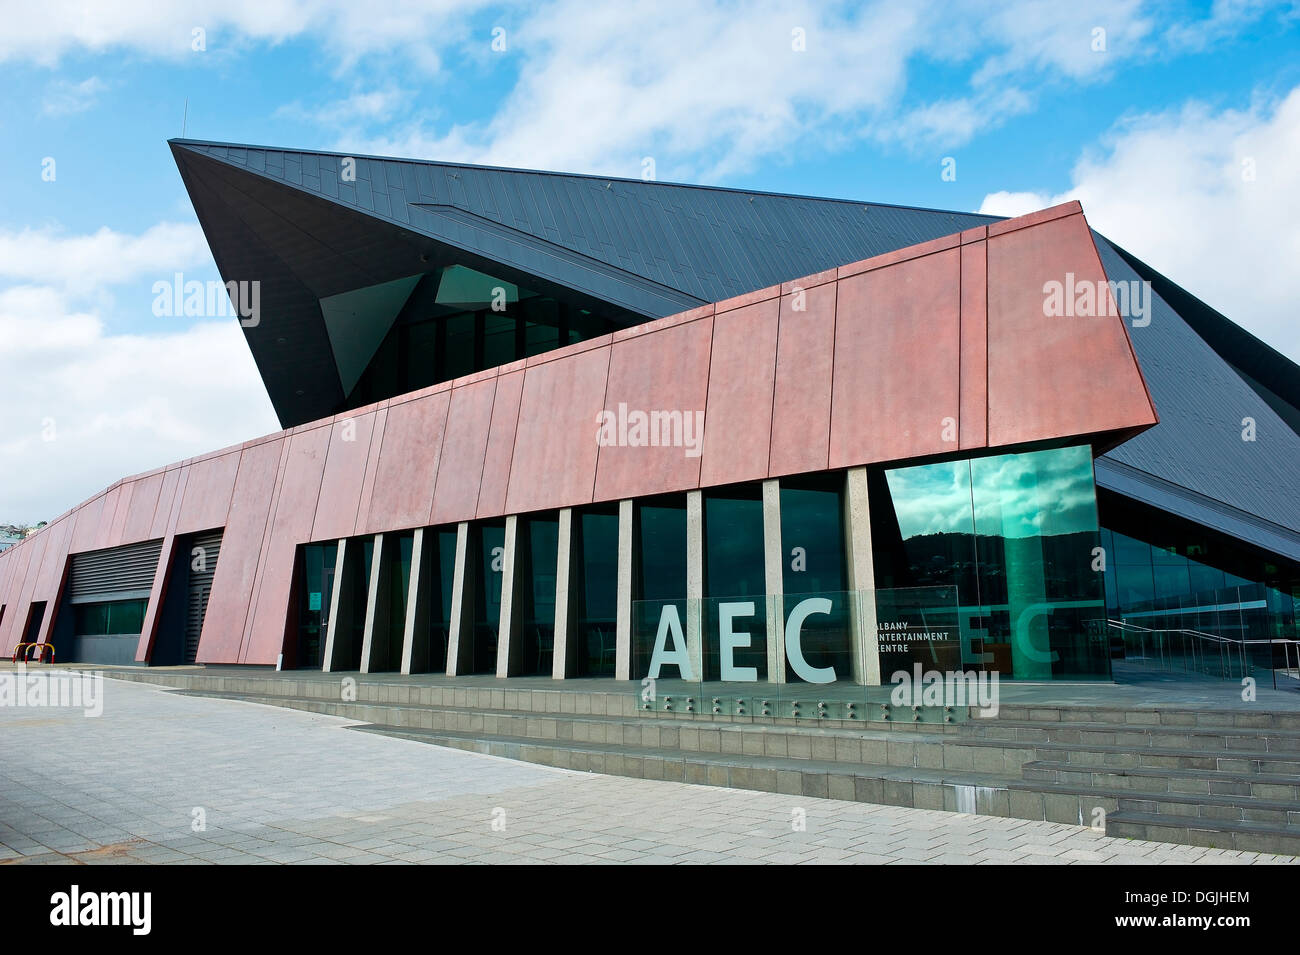 Die Albany-Entertainment-Center in Albany in Westaustralien. Stockfoto